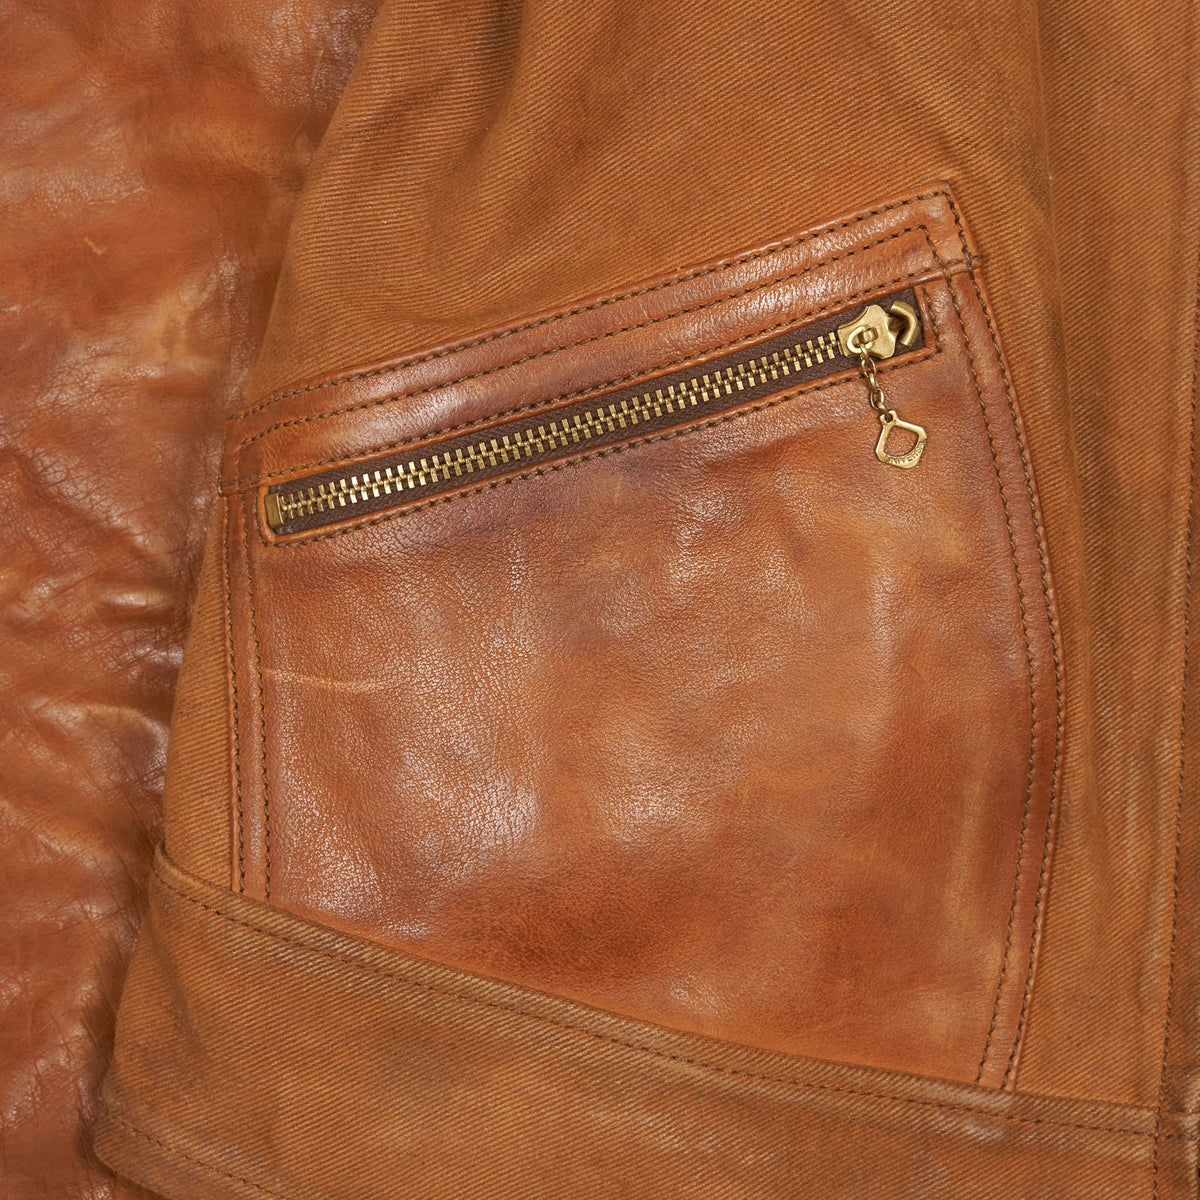 Thedi Leathers 2-Tone Canvas Buffalo Leather Jacket